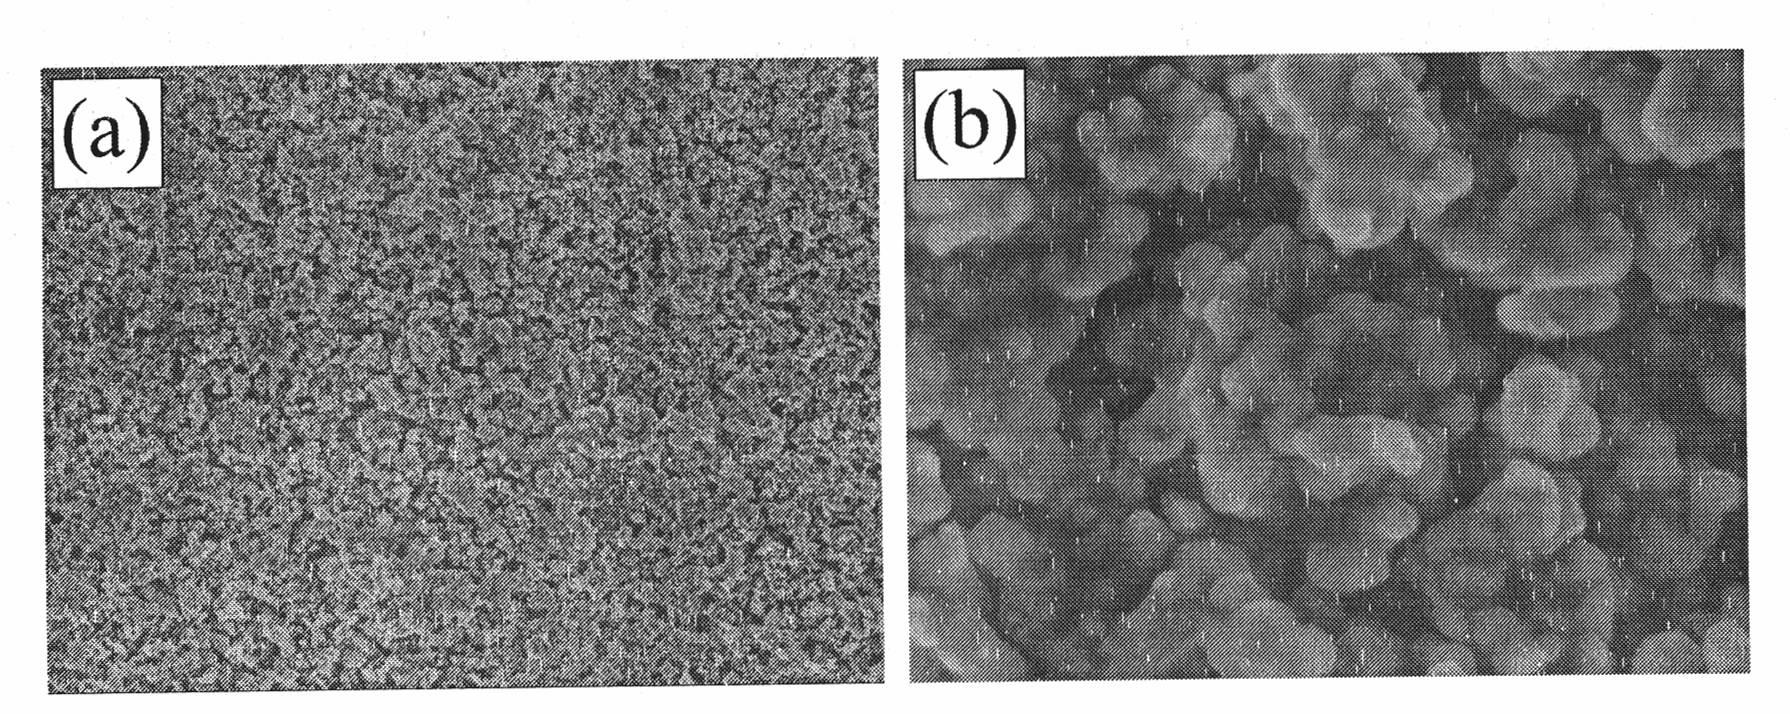 Preparation method and device for nano porous metal or ceramic